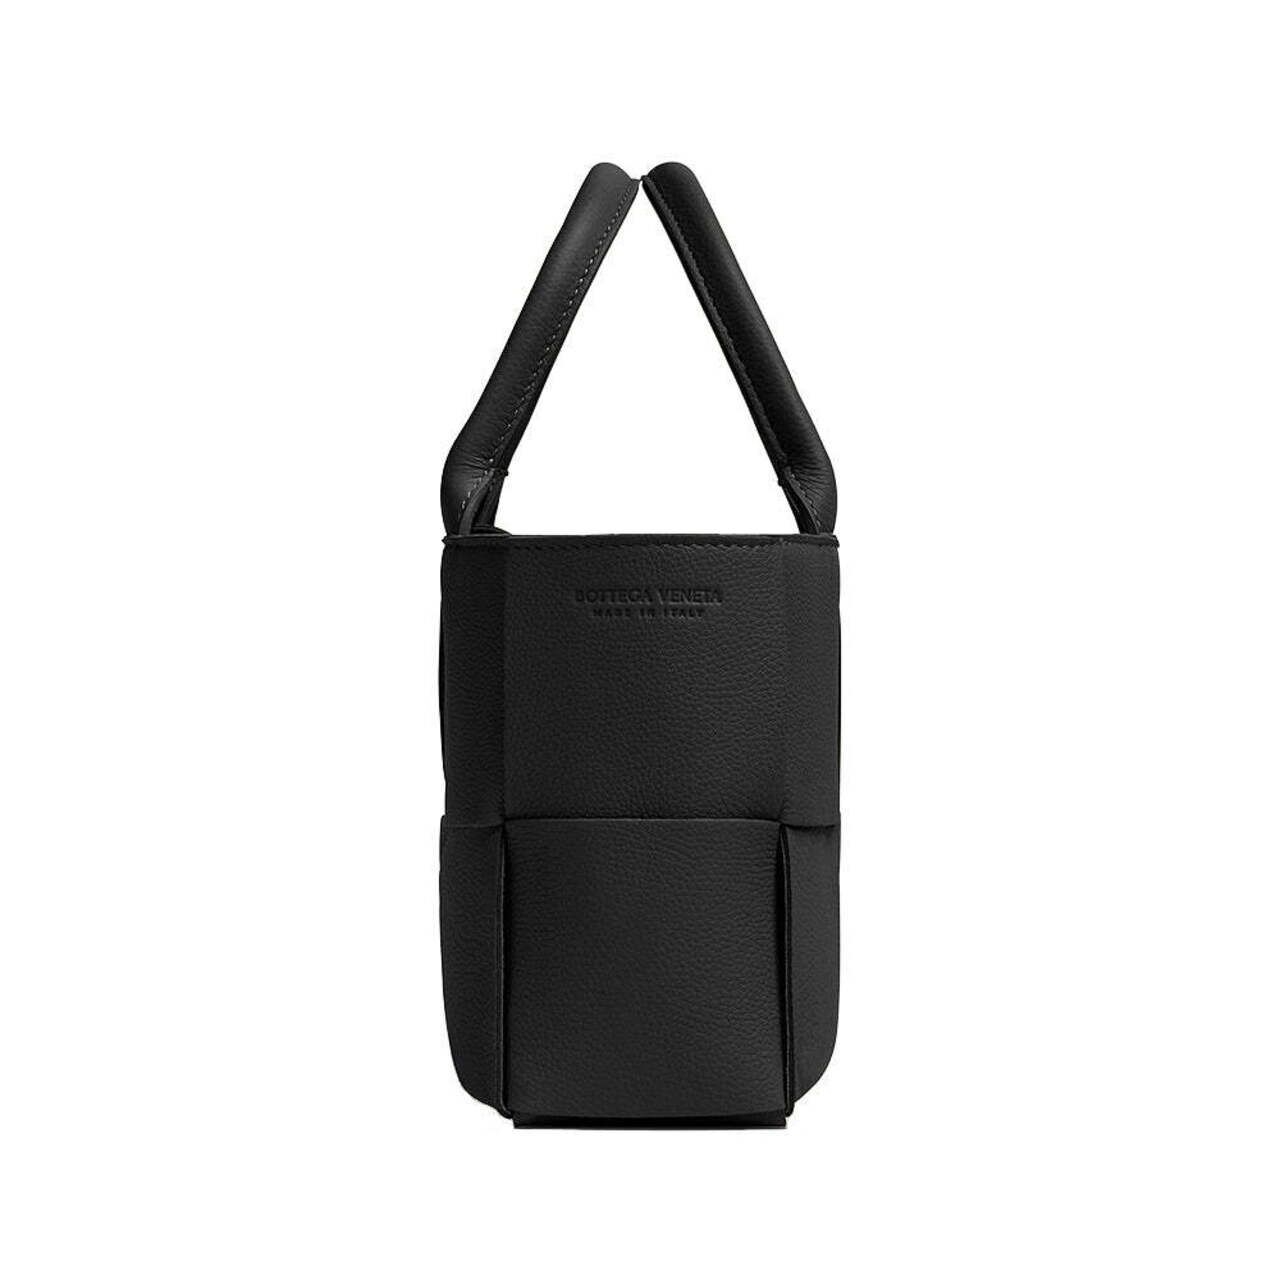 Bottega Veneta Mini Arco Tote Bag Black